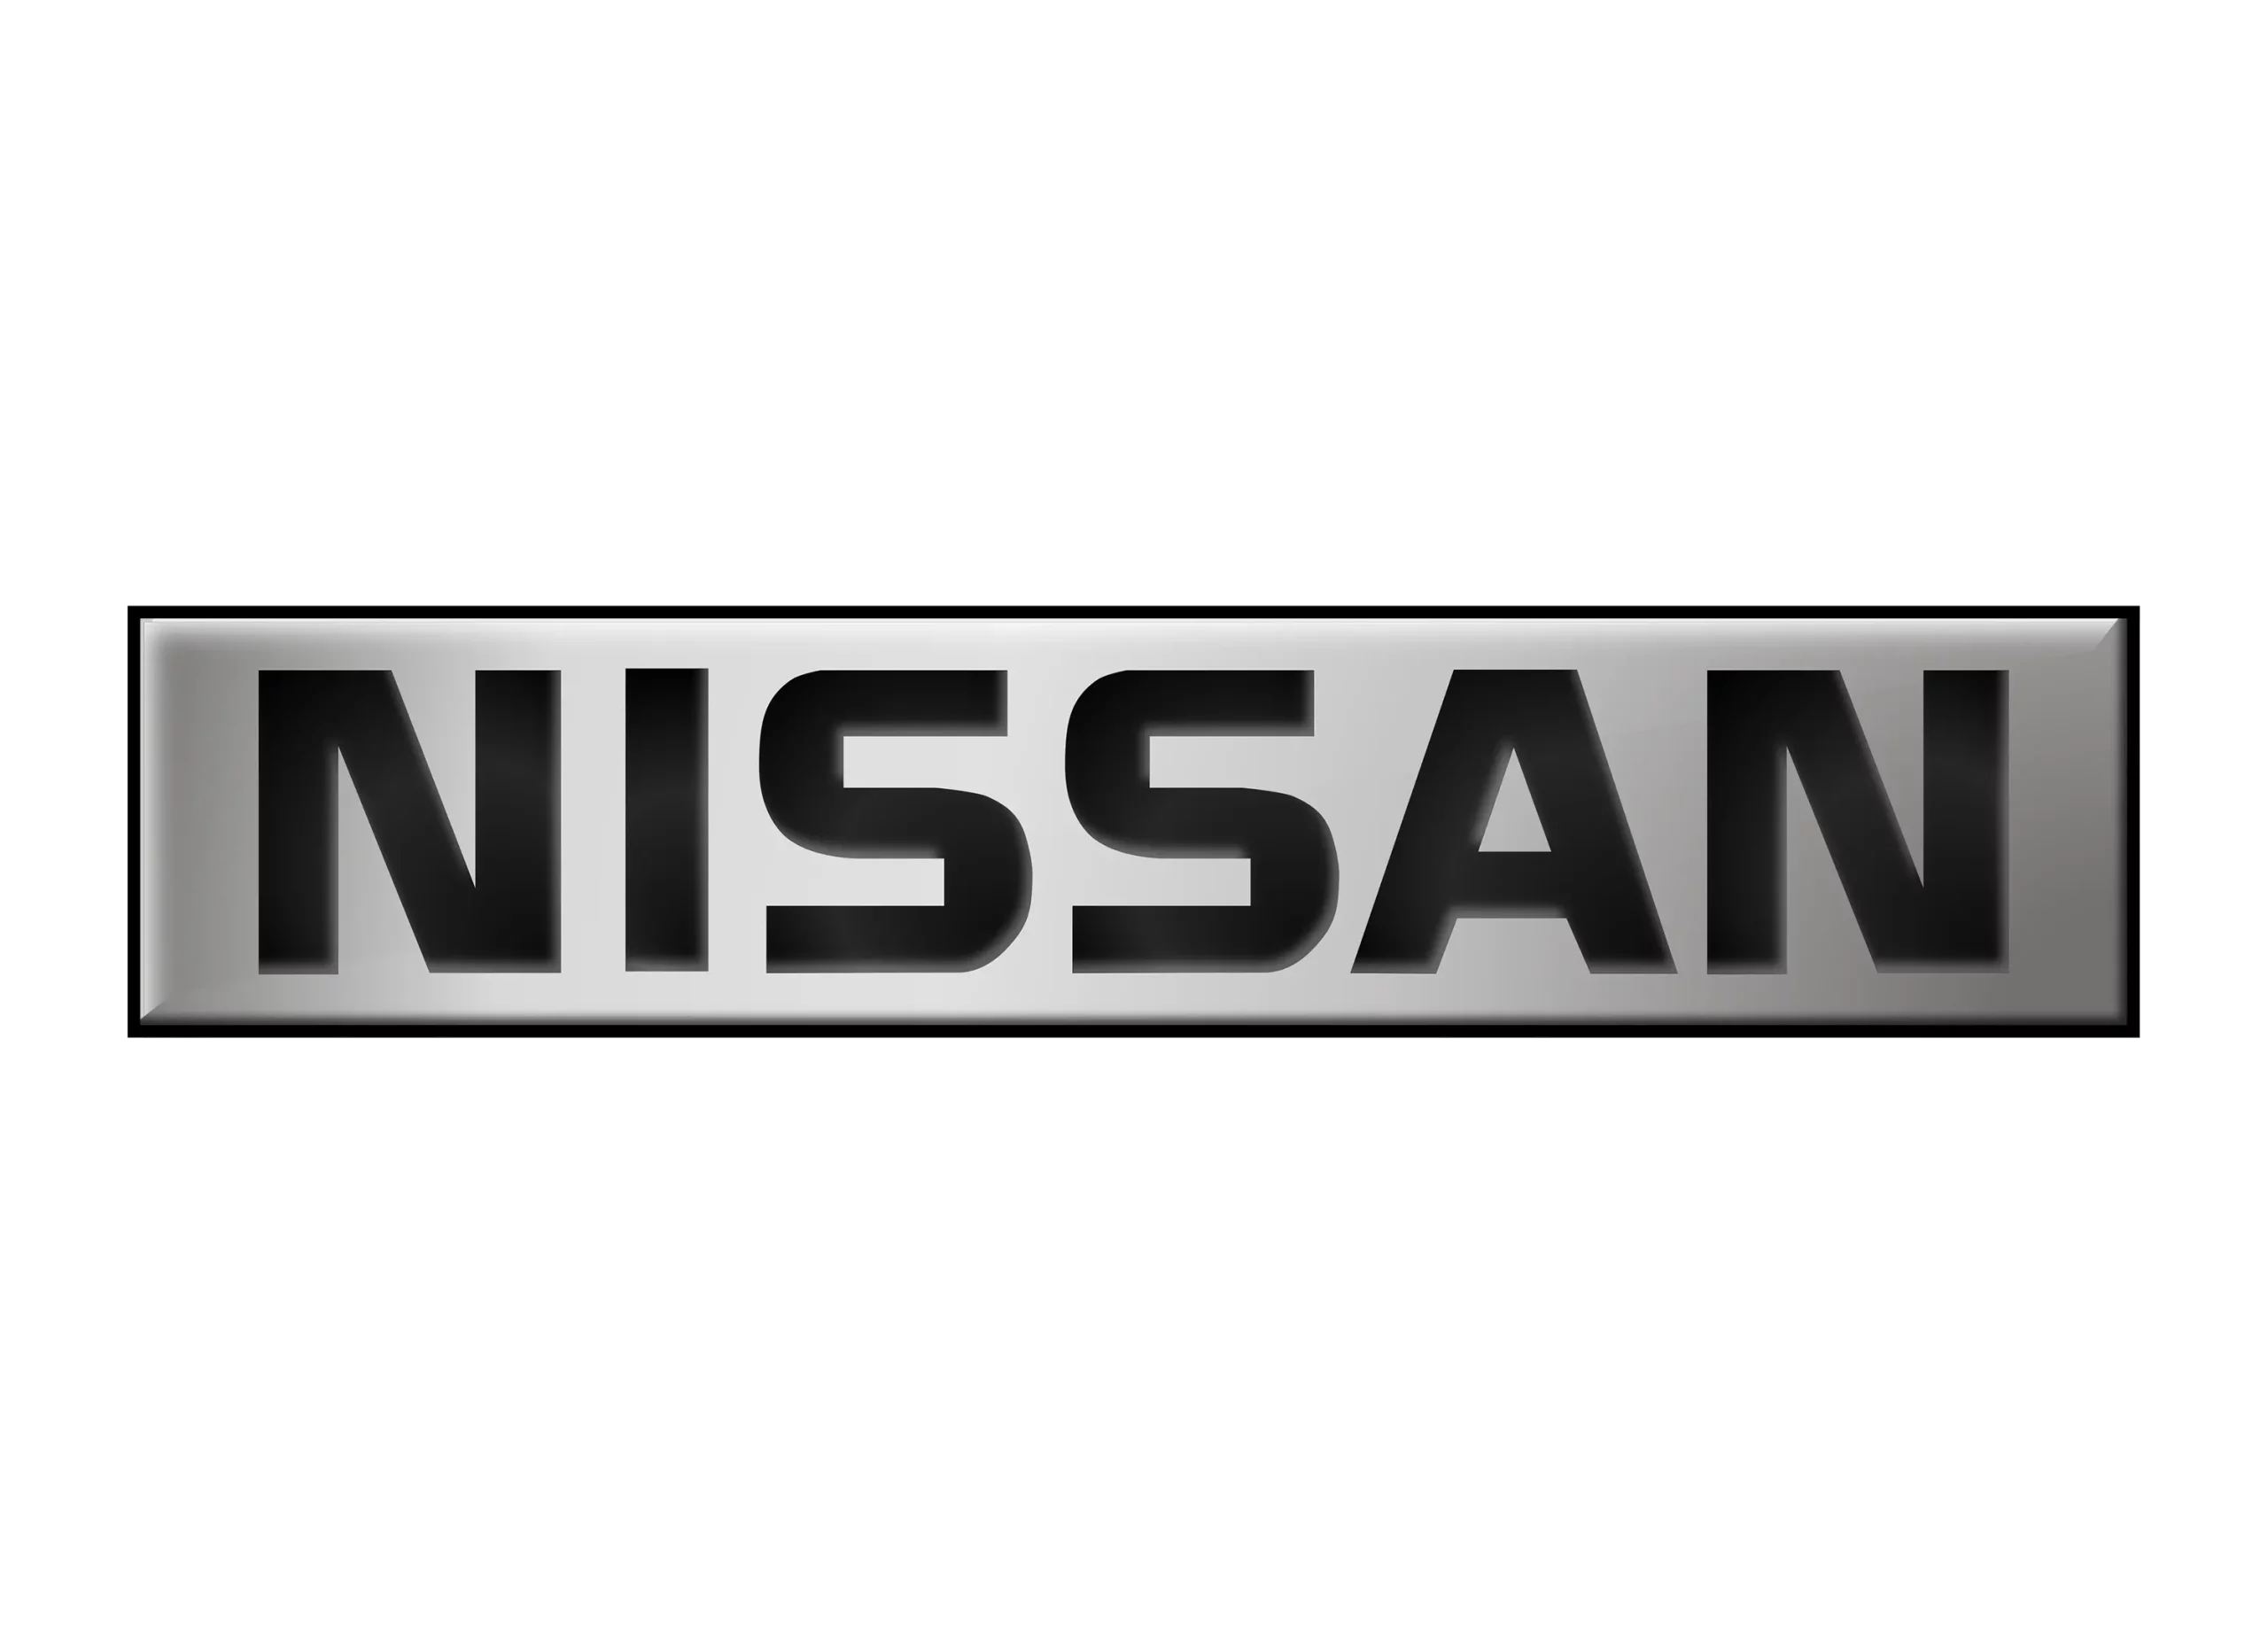 Nissan logo 1978-1988